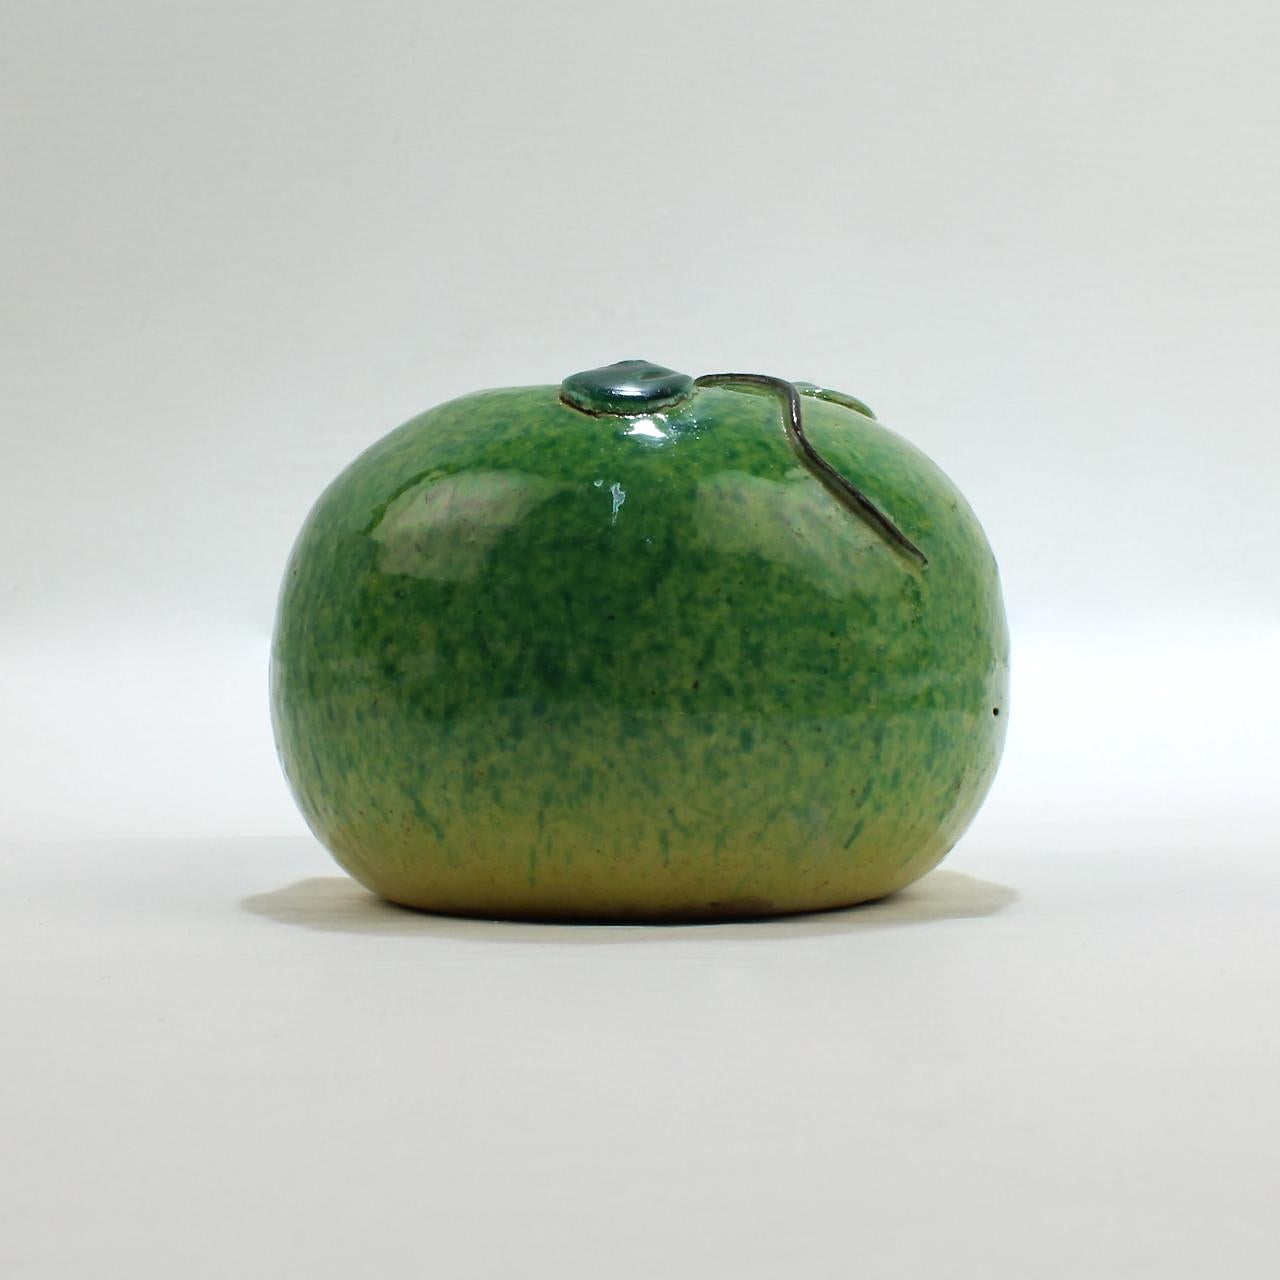 20th Century Antique Chinese Export Porcelain Green Apple Altar Fruit Ex-Gutfreund Collection